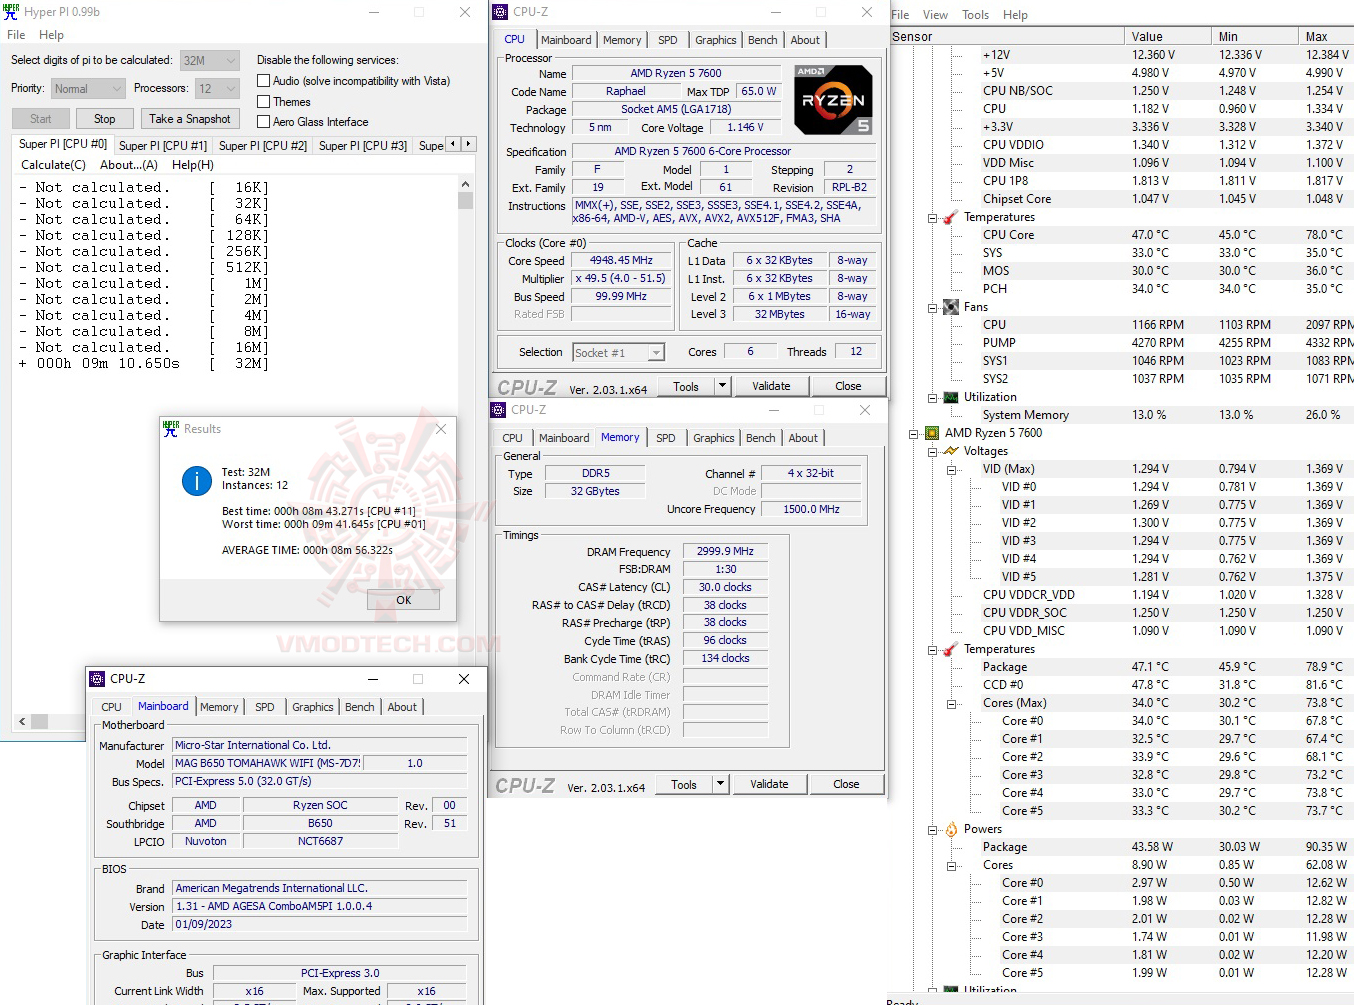 h32 2 AMD RYZEN 5 7600 PROCESSOR REVIEW